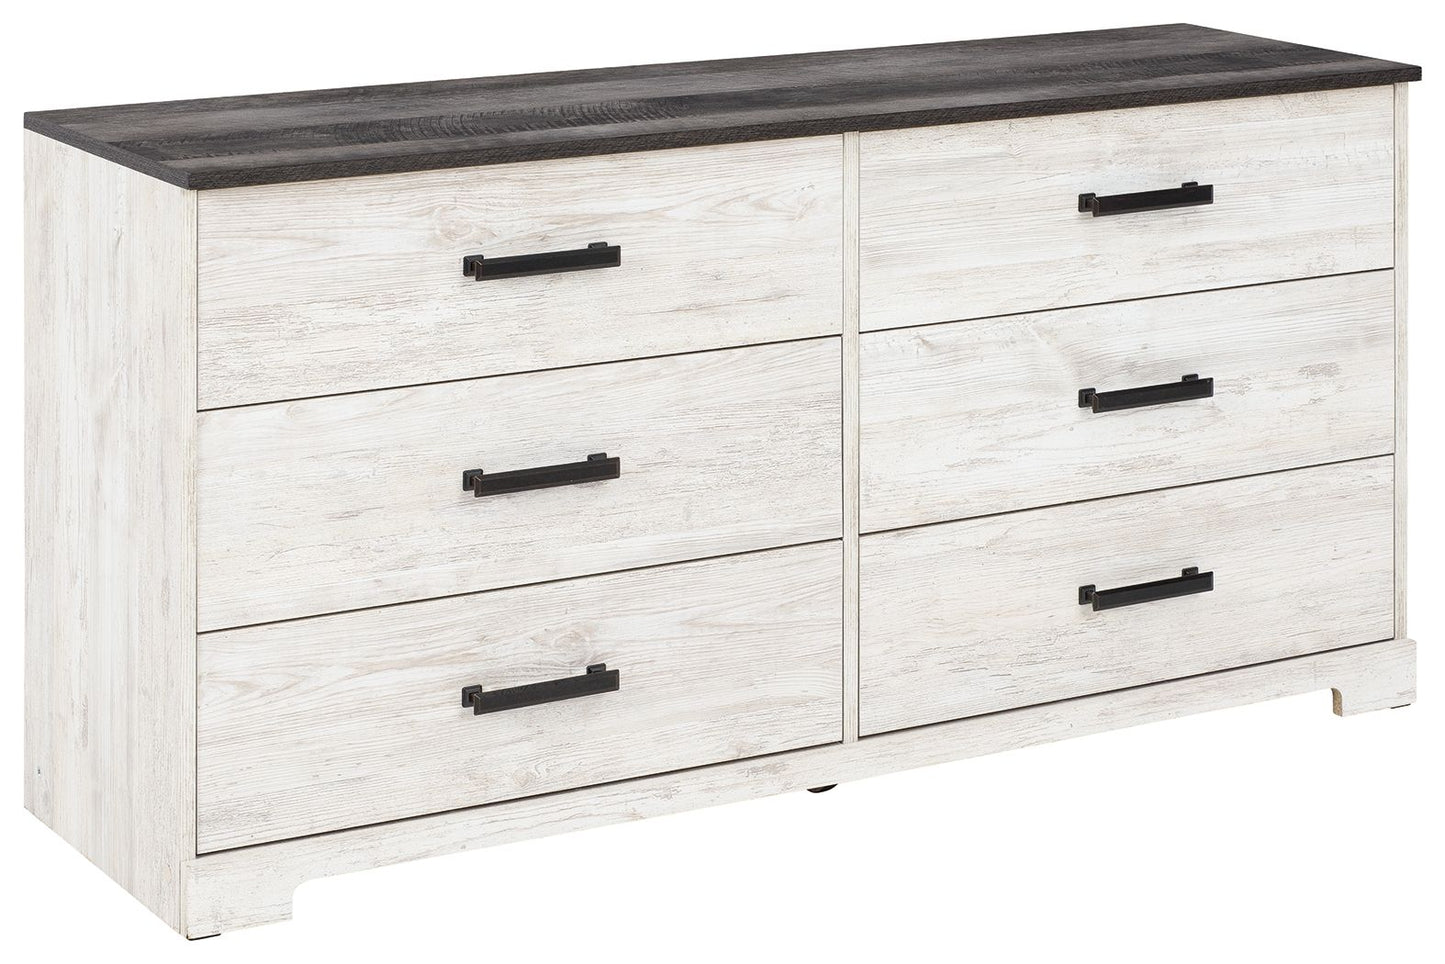 Shawburn - White / Black / Gray - Six Drawer Dresser - Pewter-tone Pulls